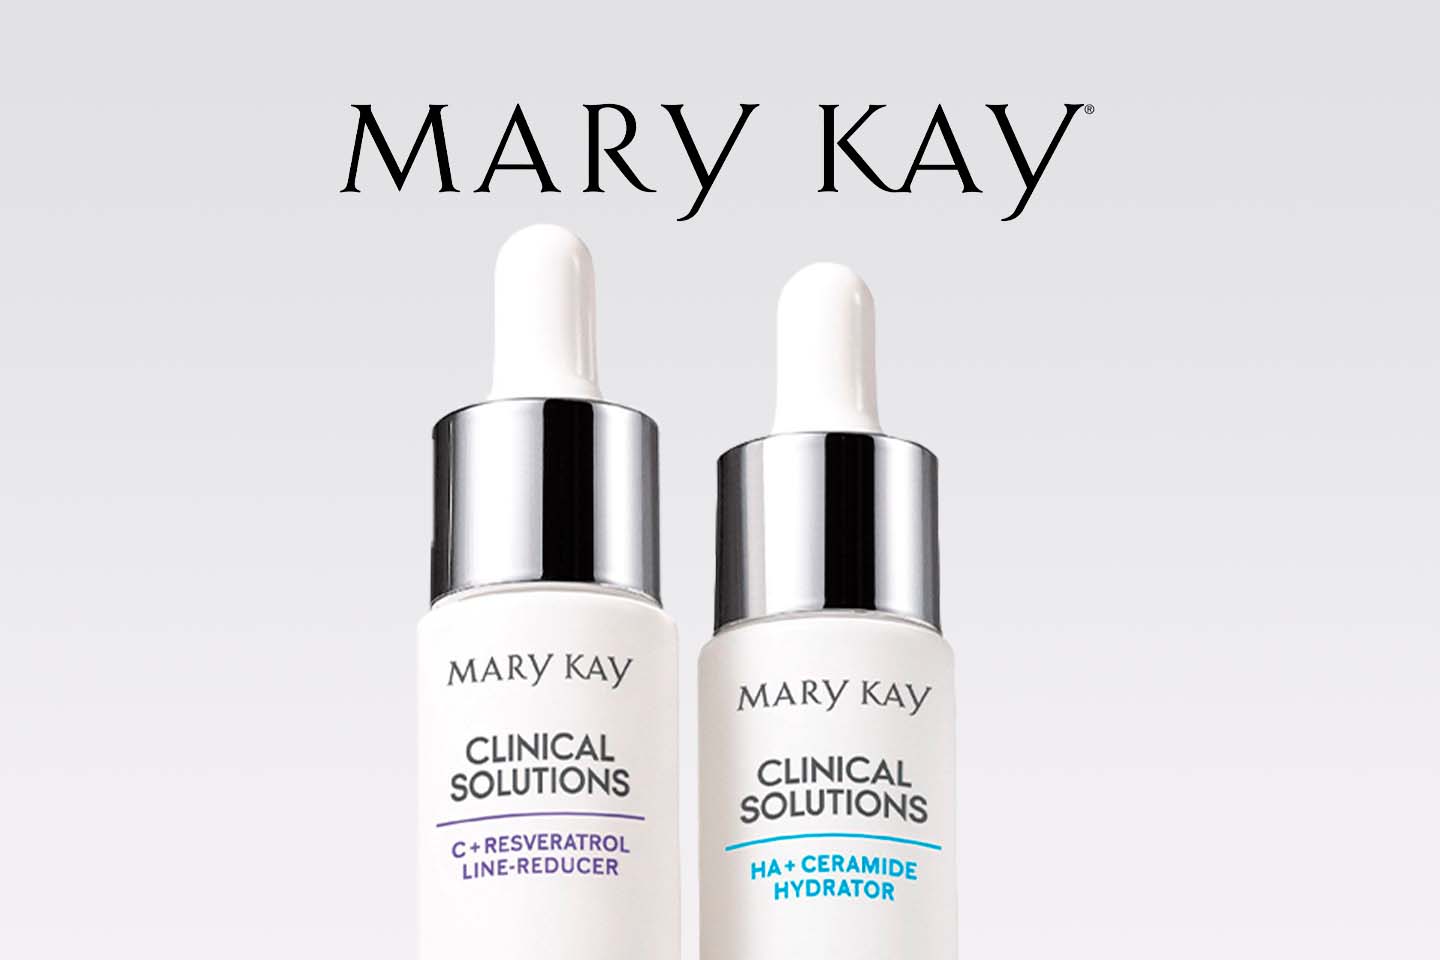 Mary Kay の 2 つのスキンケア製品 